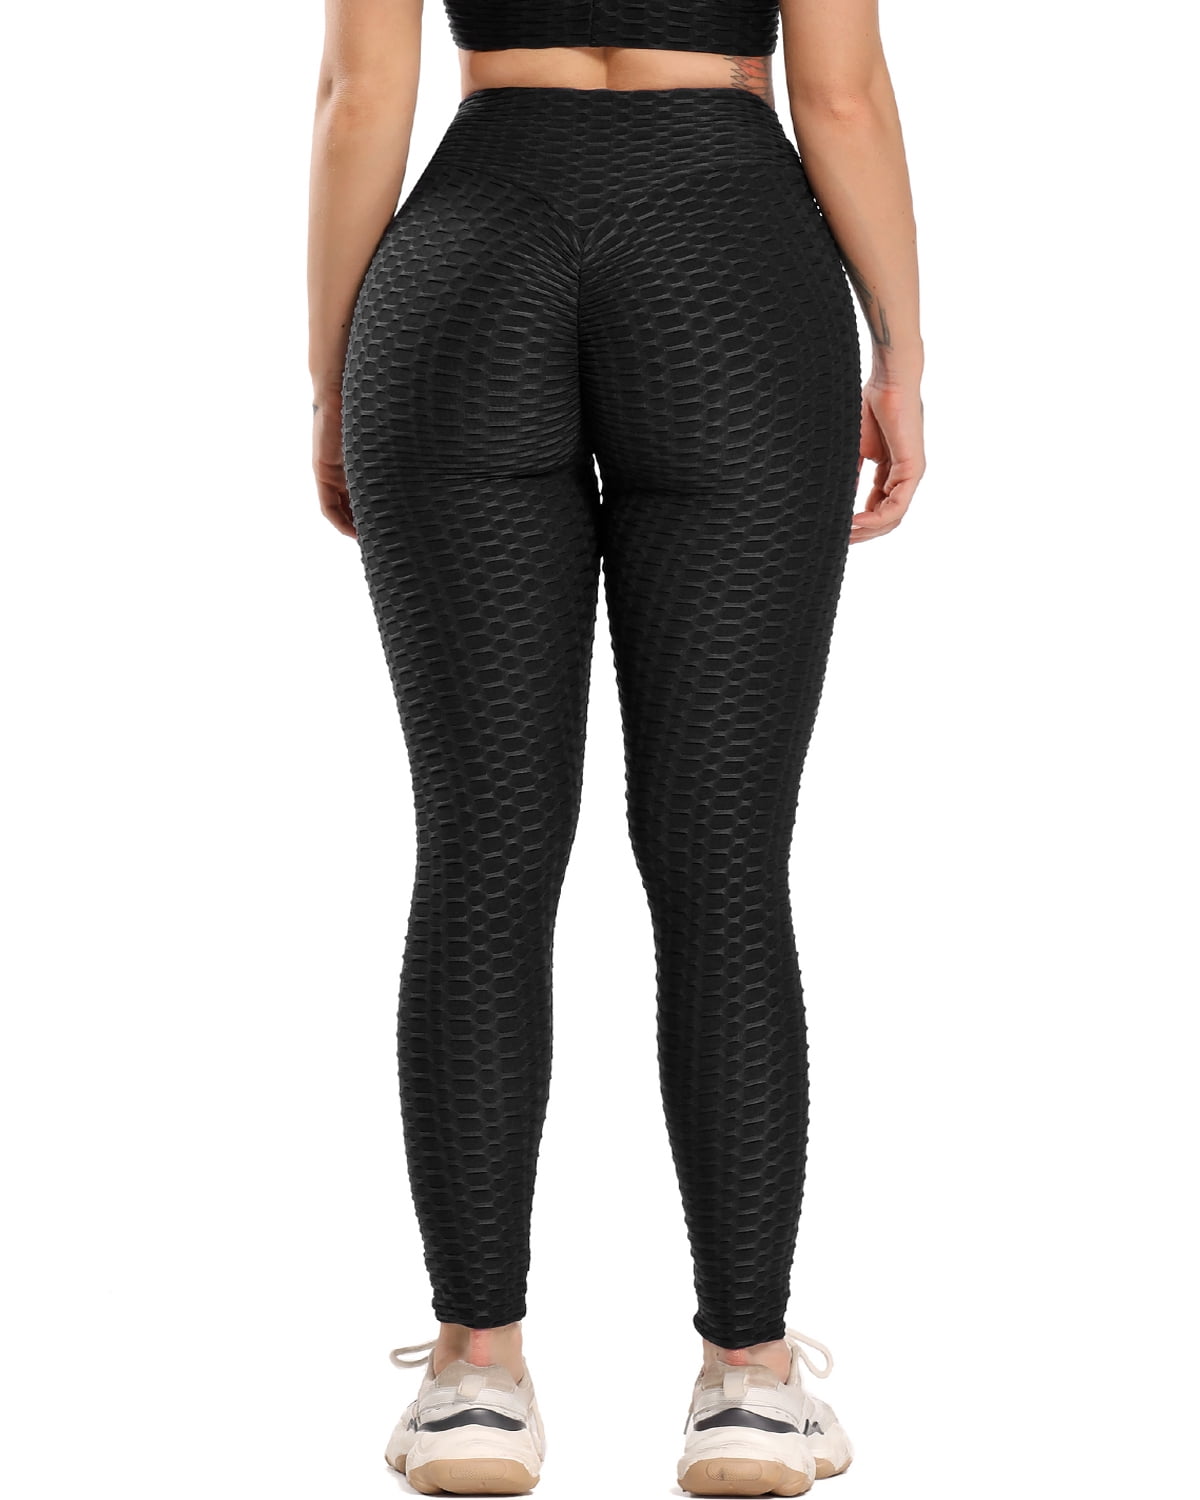 leggings size large Butt Lift Yoga Pants scrunch Black